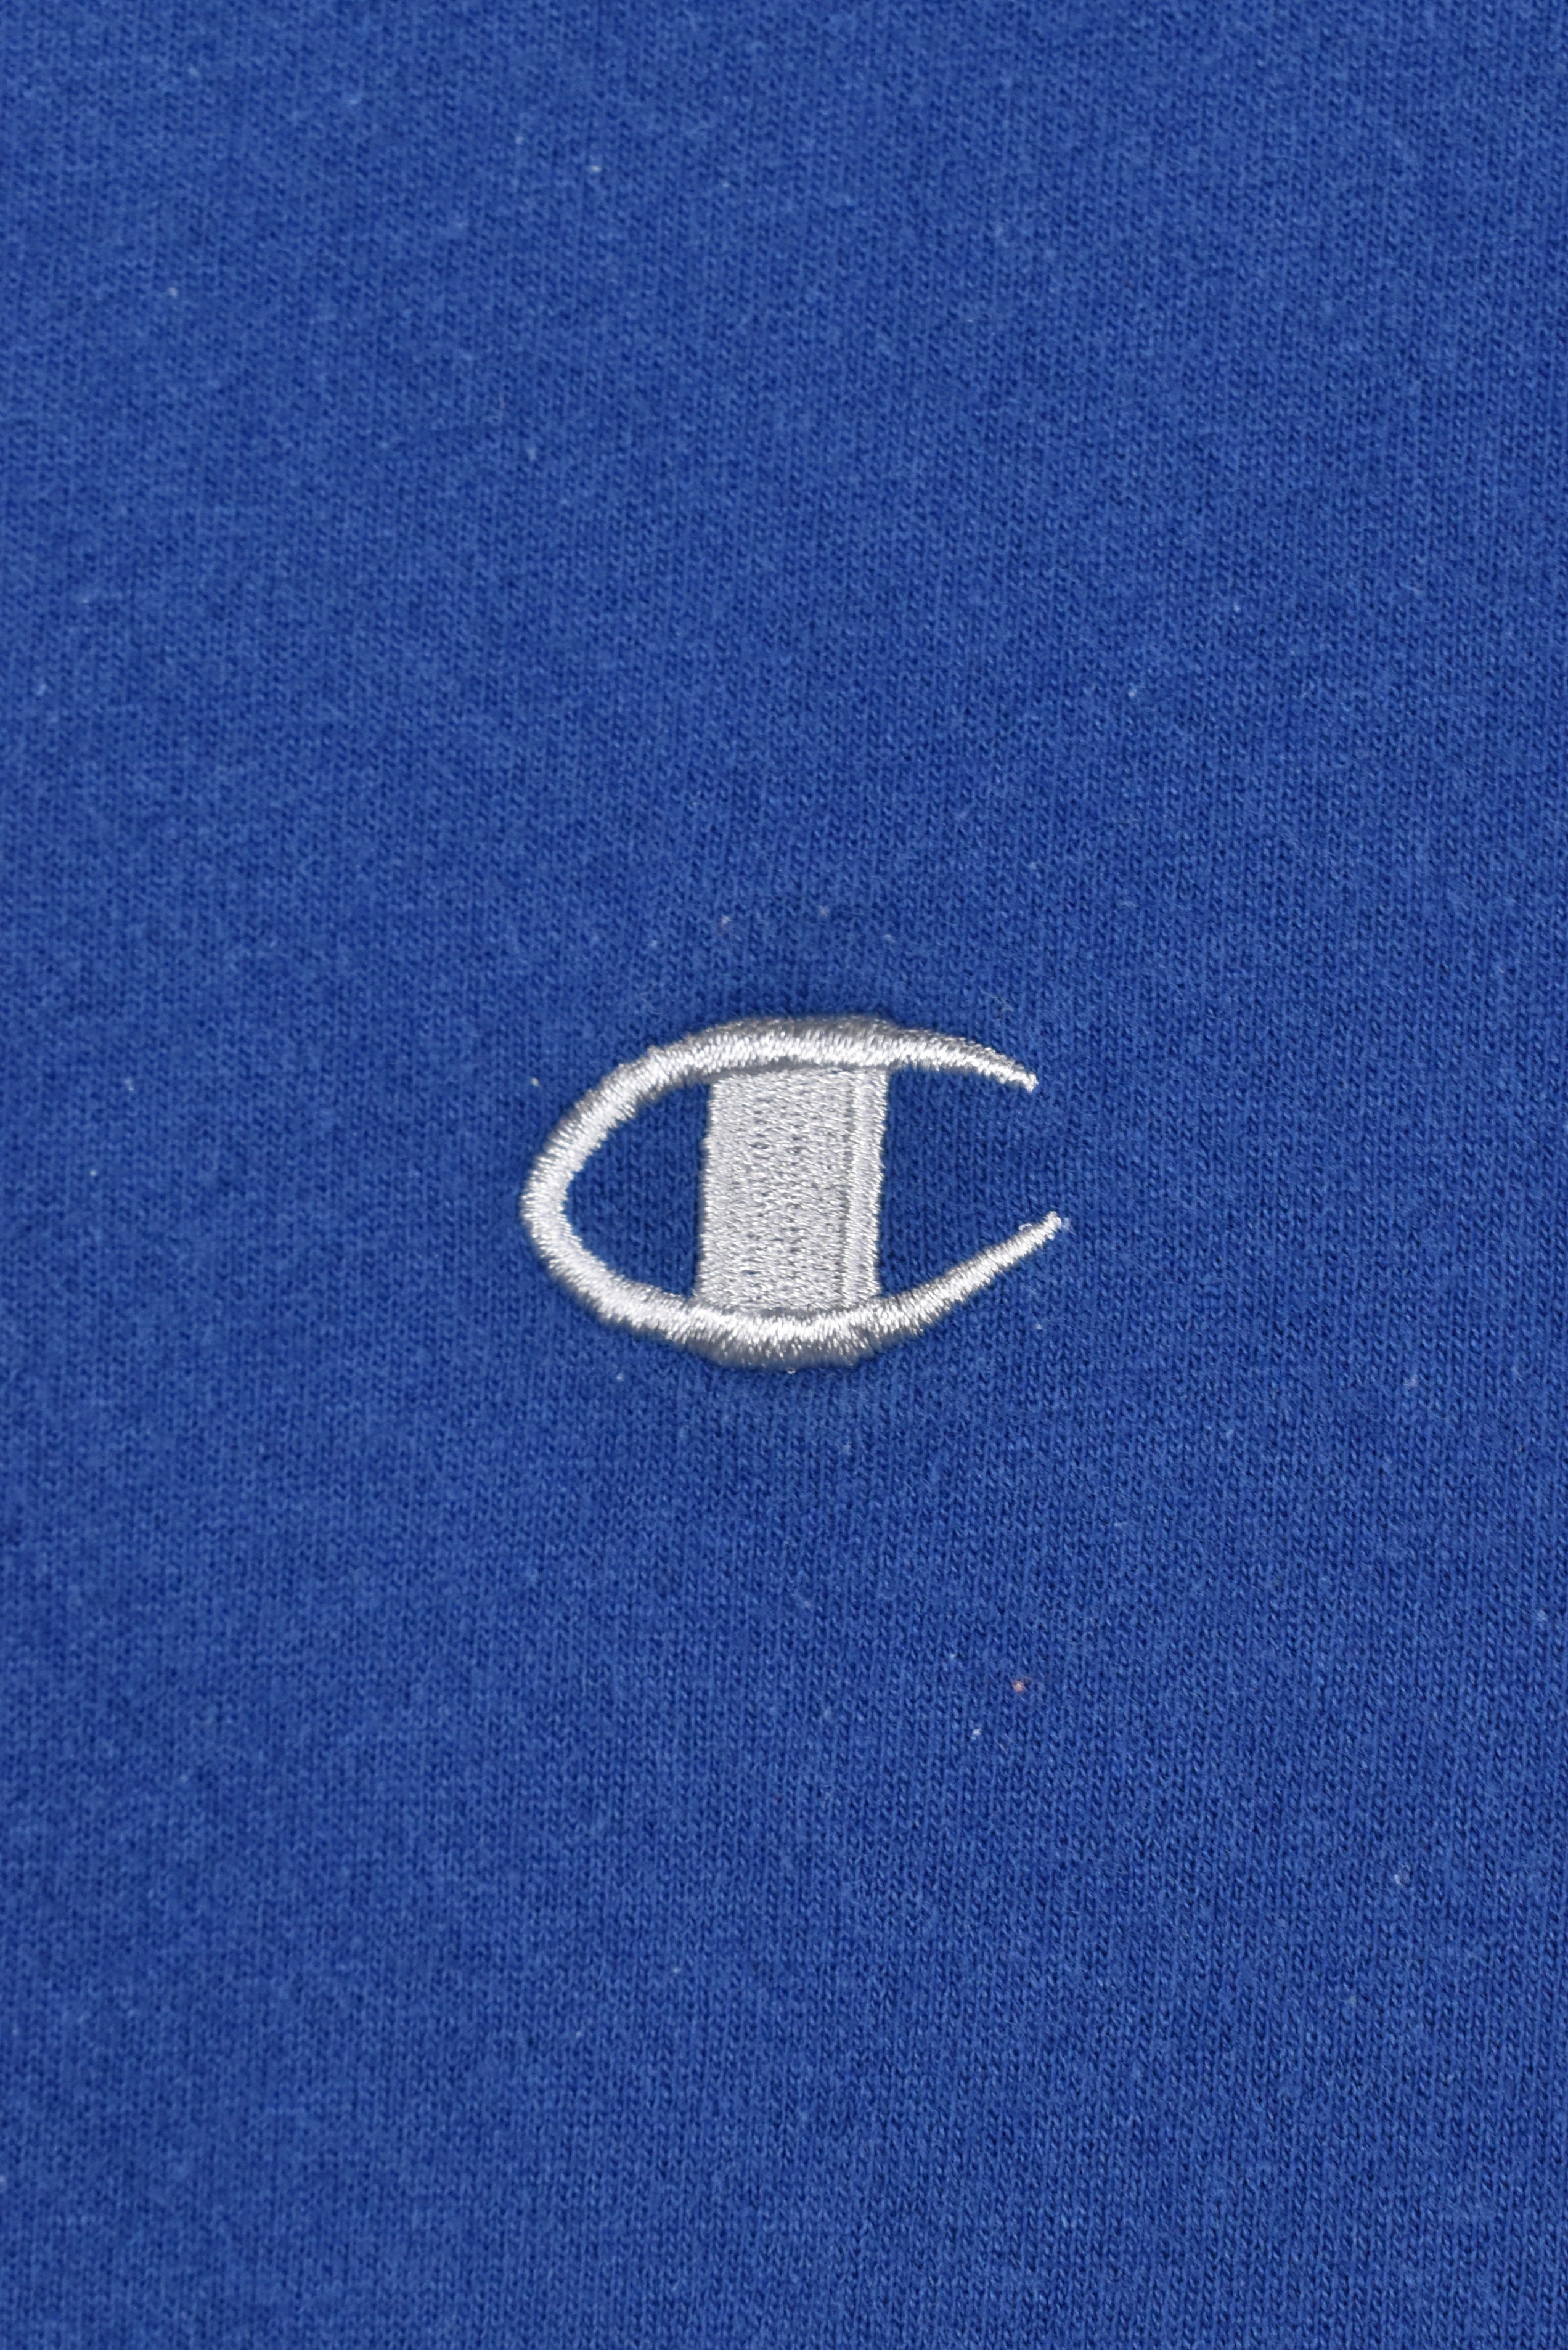 Vintage Champion hoodie, navy blue embroidered sweatshirt - AU Large CHAMPION